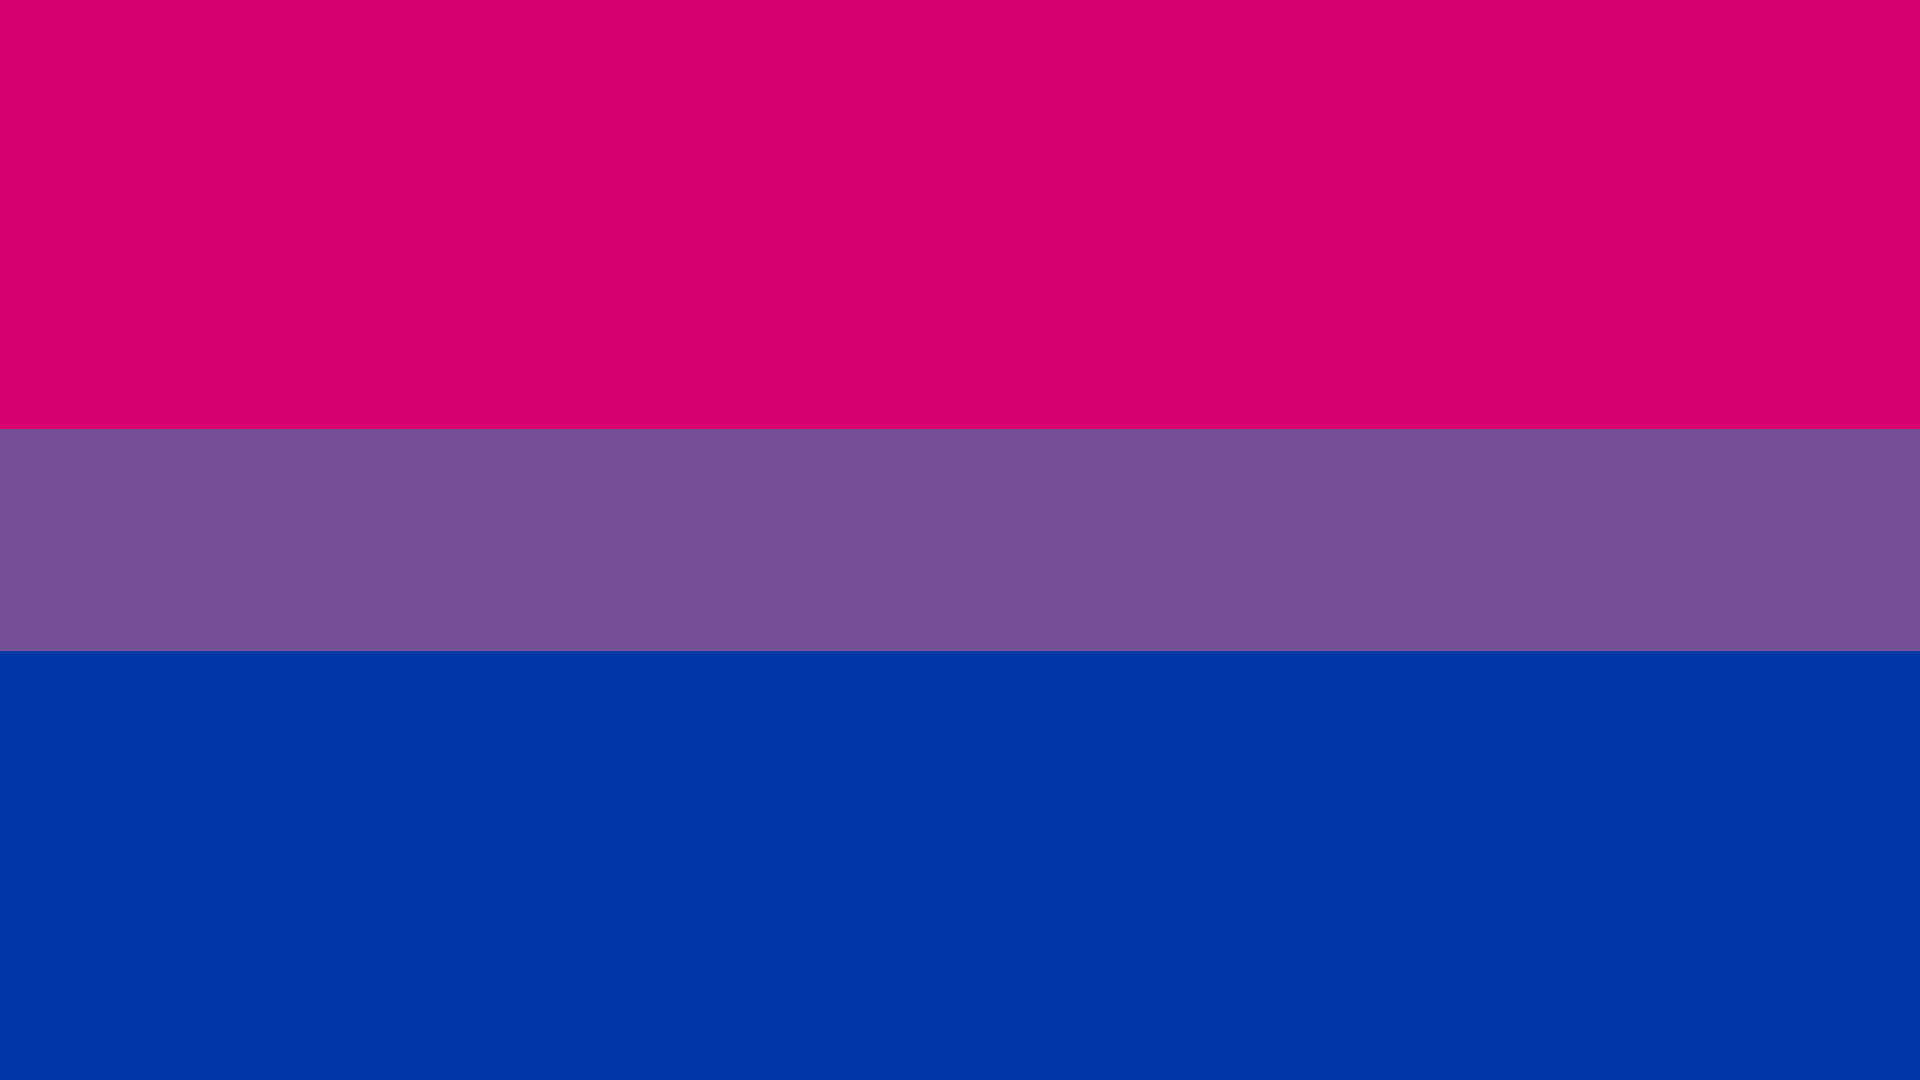 Bisexual Pride Flag by NecronomiconOfGod on DeviantArt